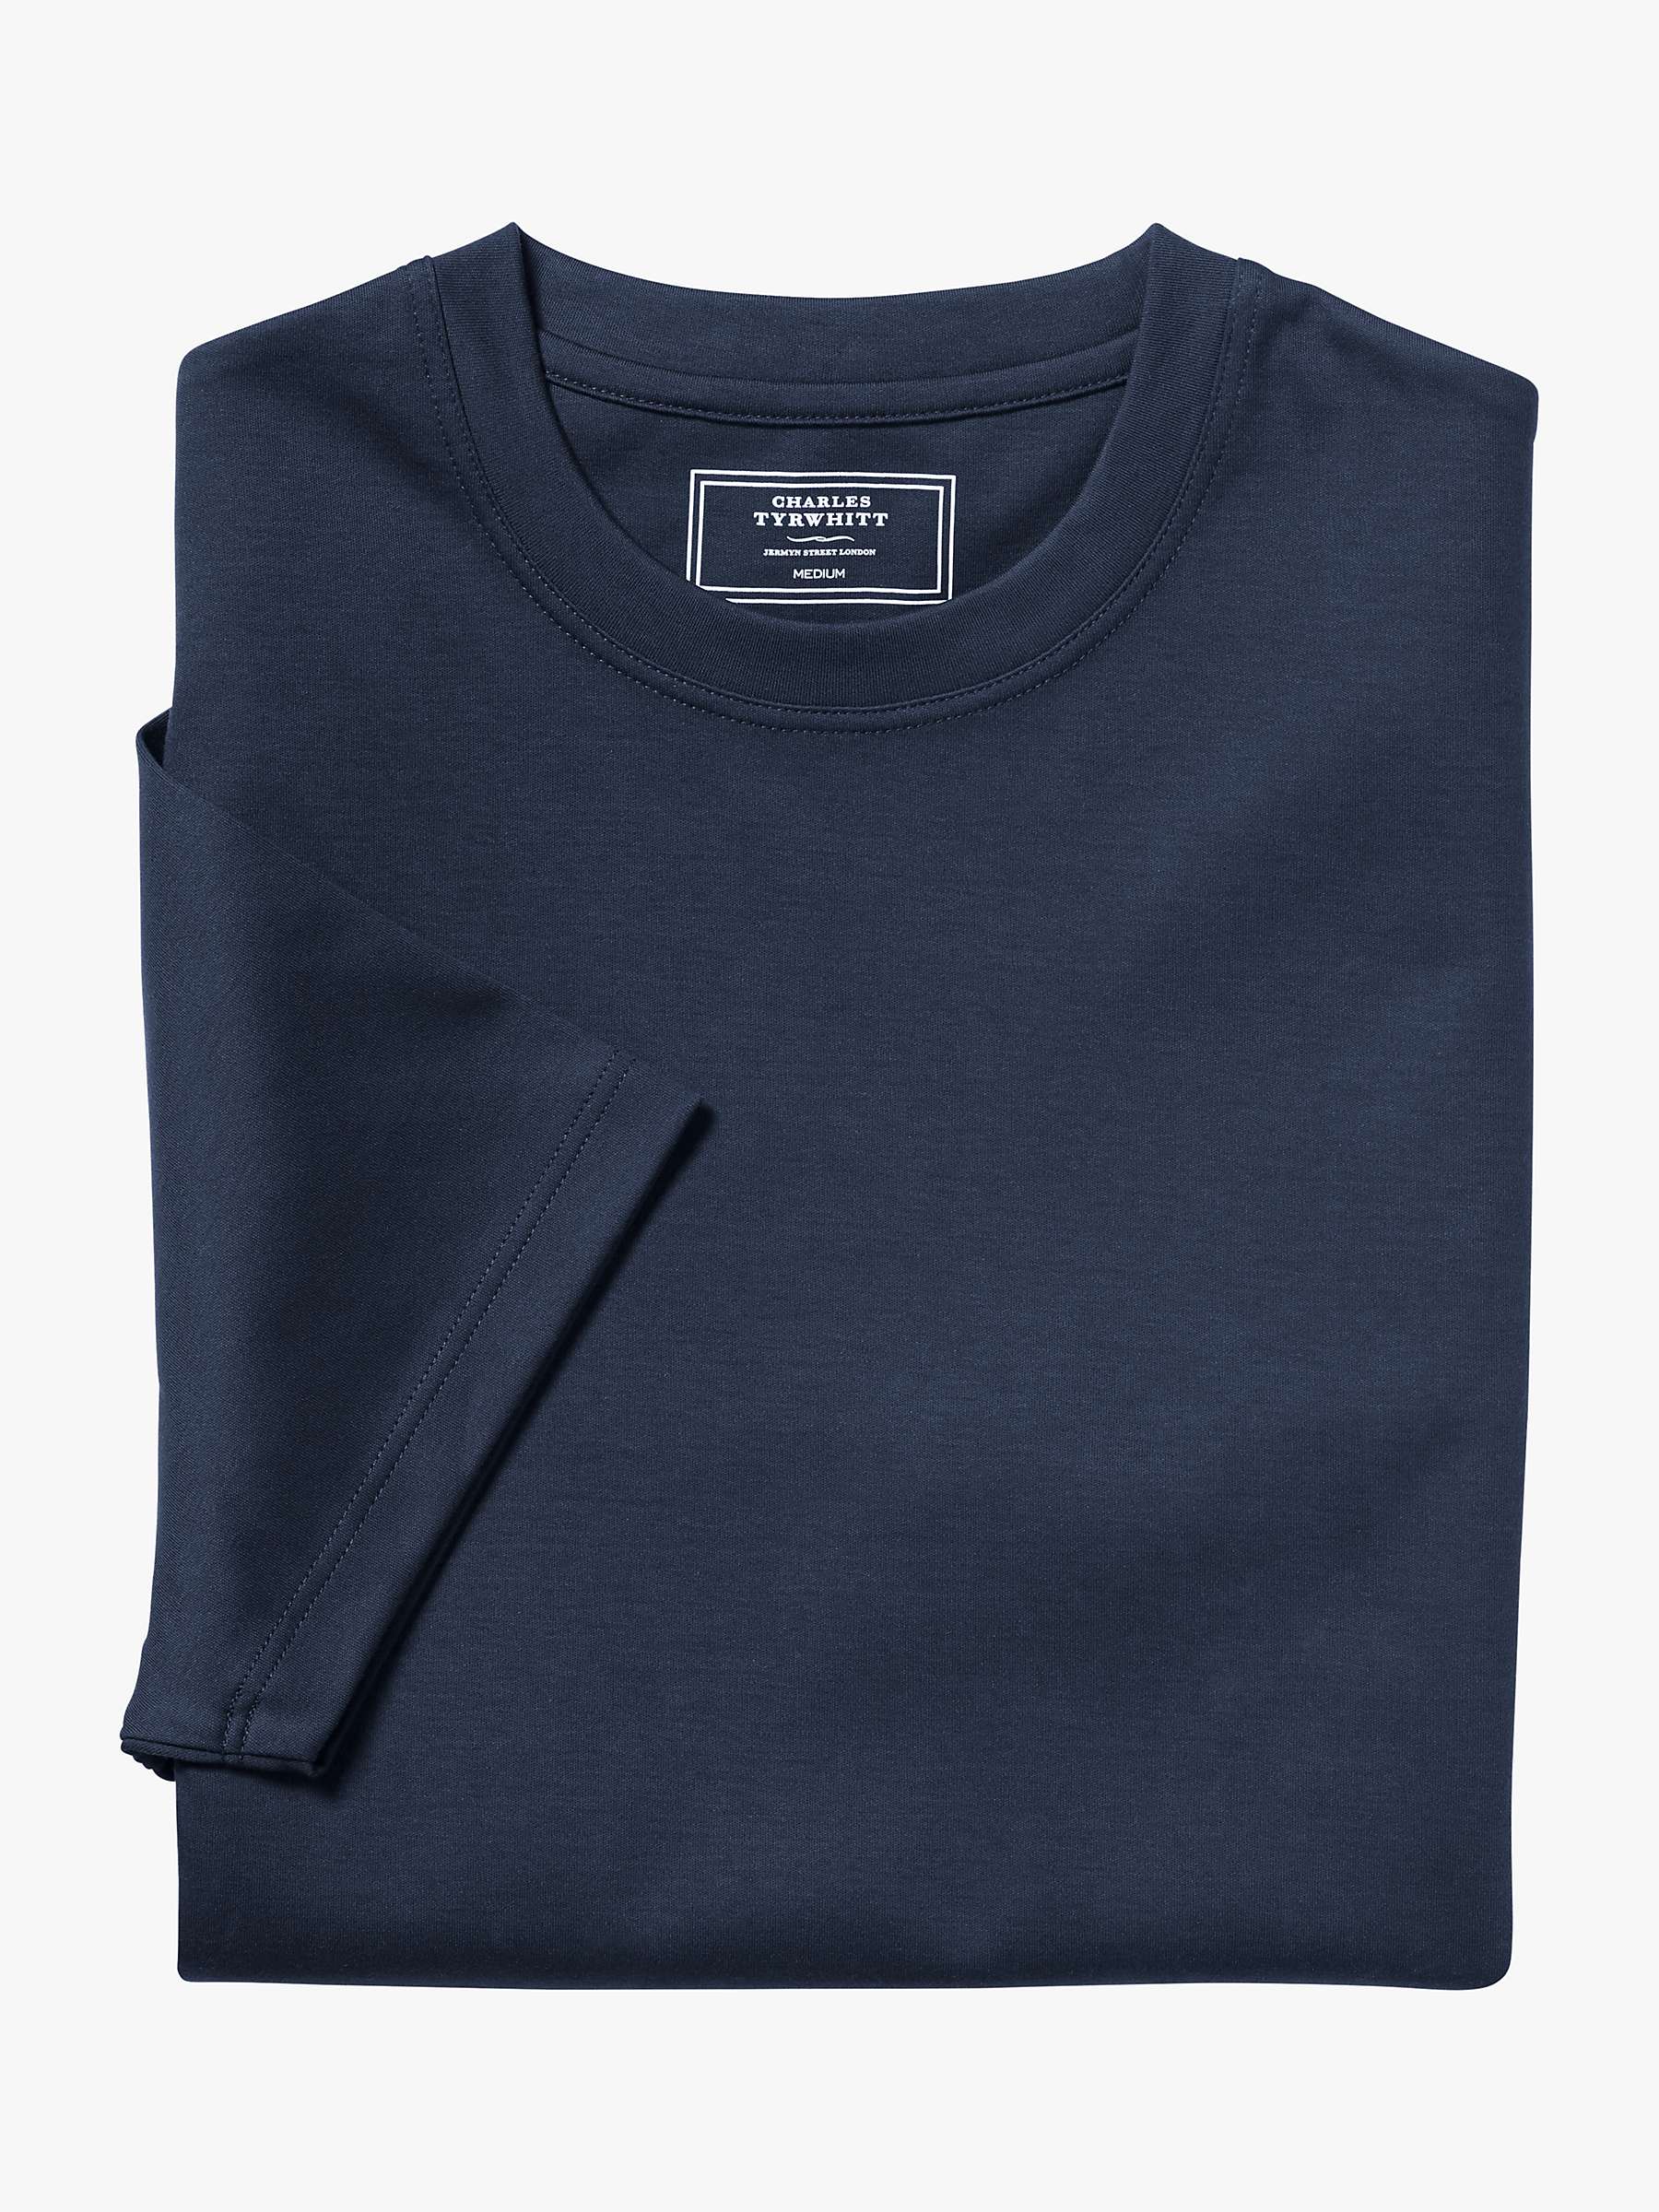 Charles Tyrwhitt Cotton Short Sleeve T-Shirt, Navy at John Lewis & Partners